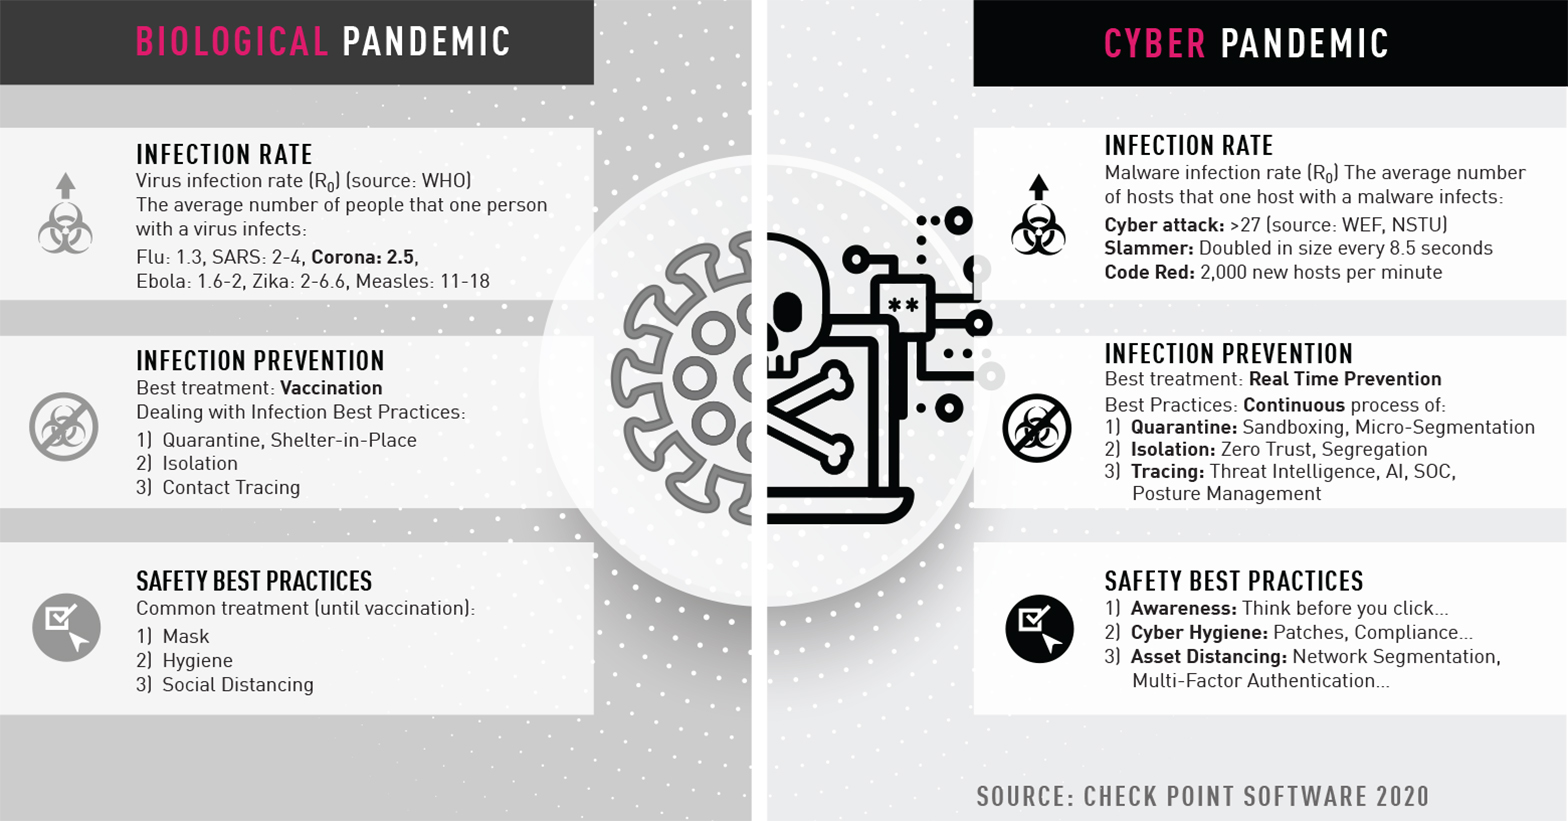 Pandemic vs Cyber Pandemic